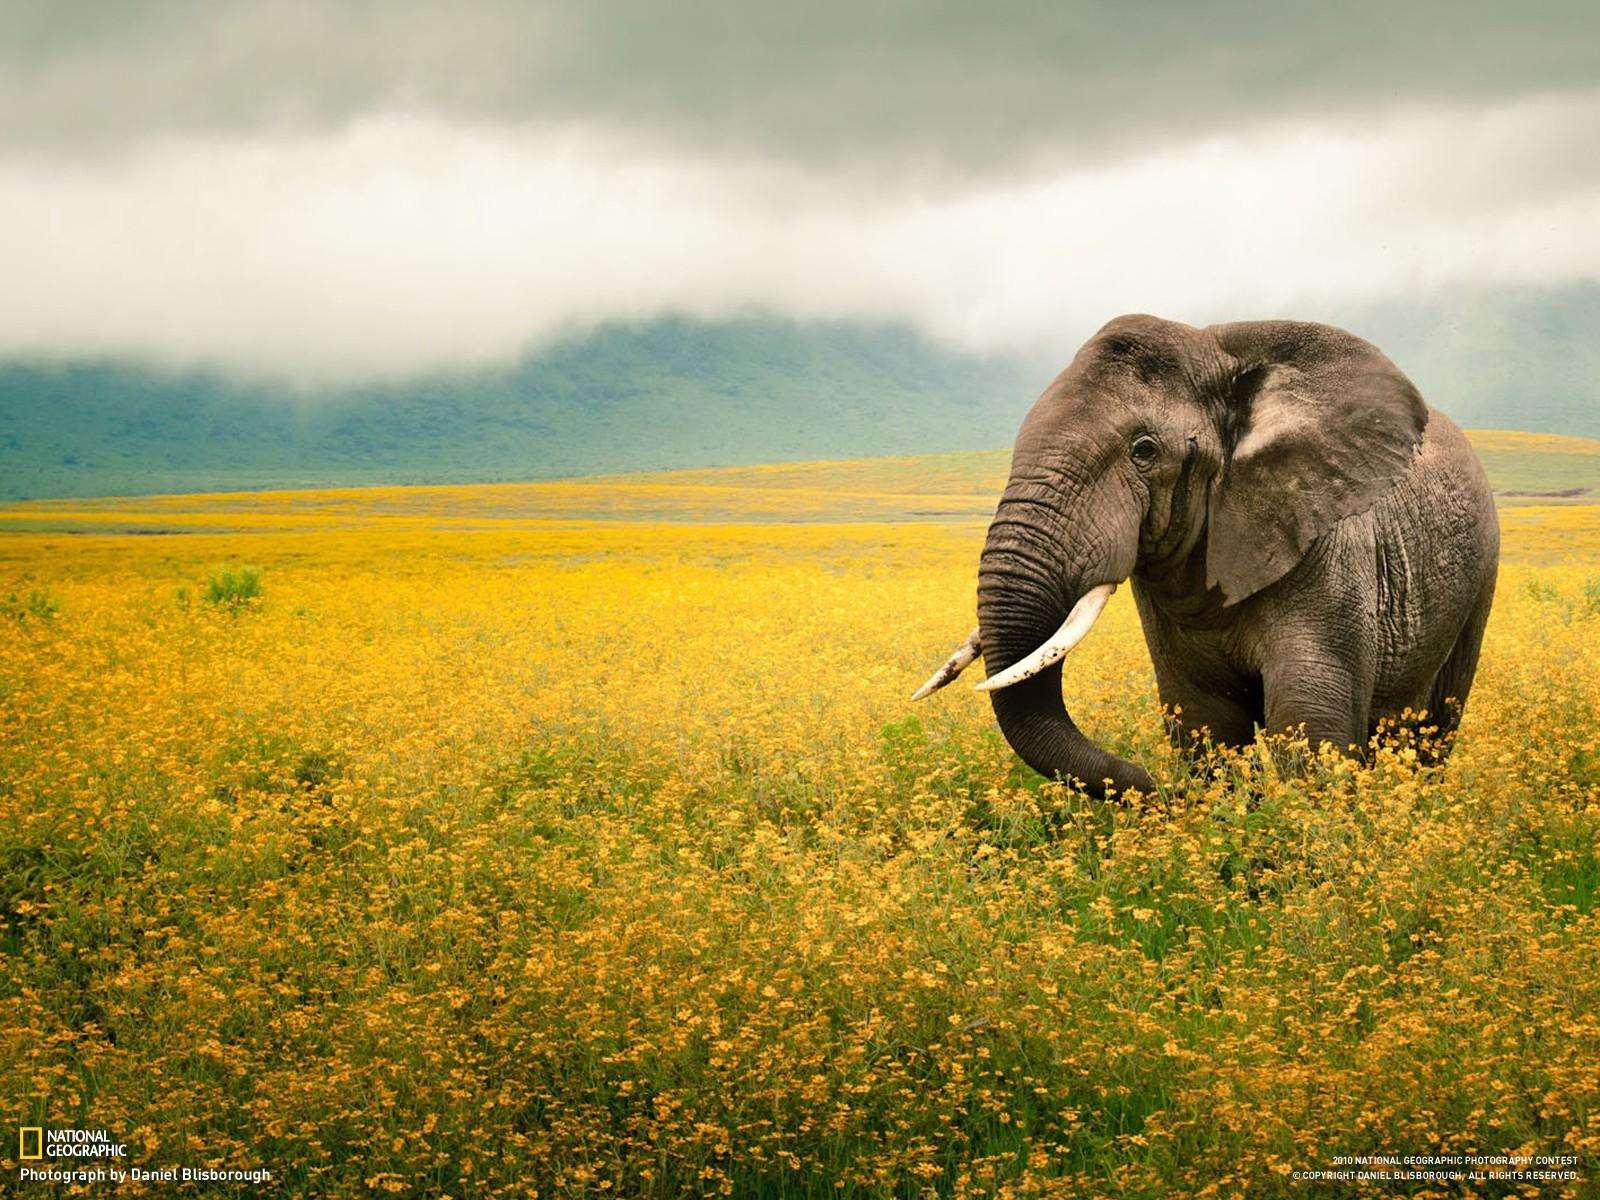 National Geographic, fields, animals, Tanzania, elephants, yellow